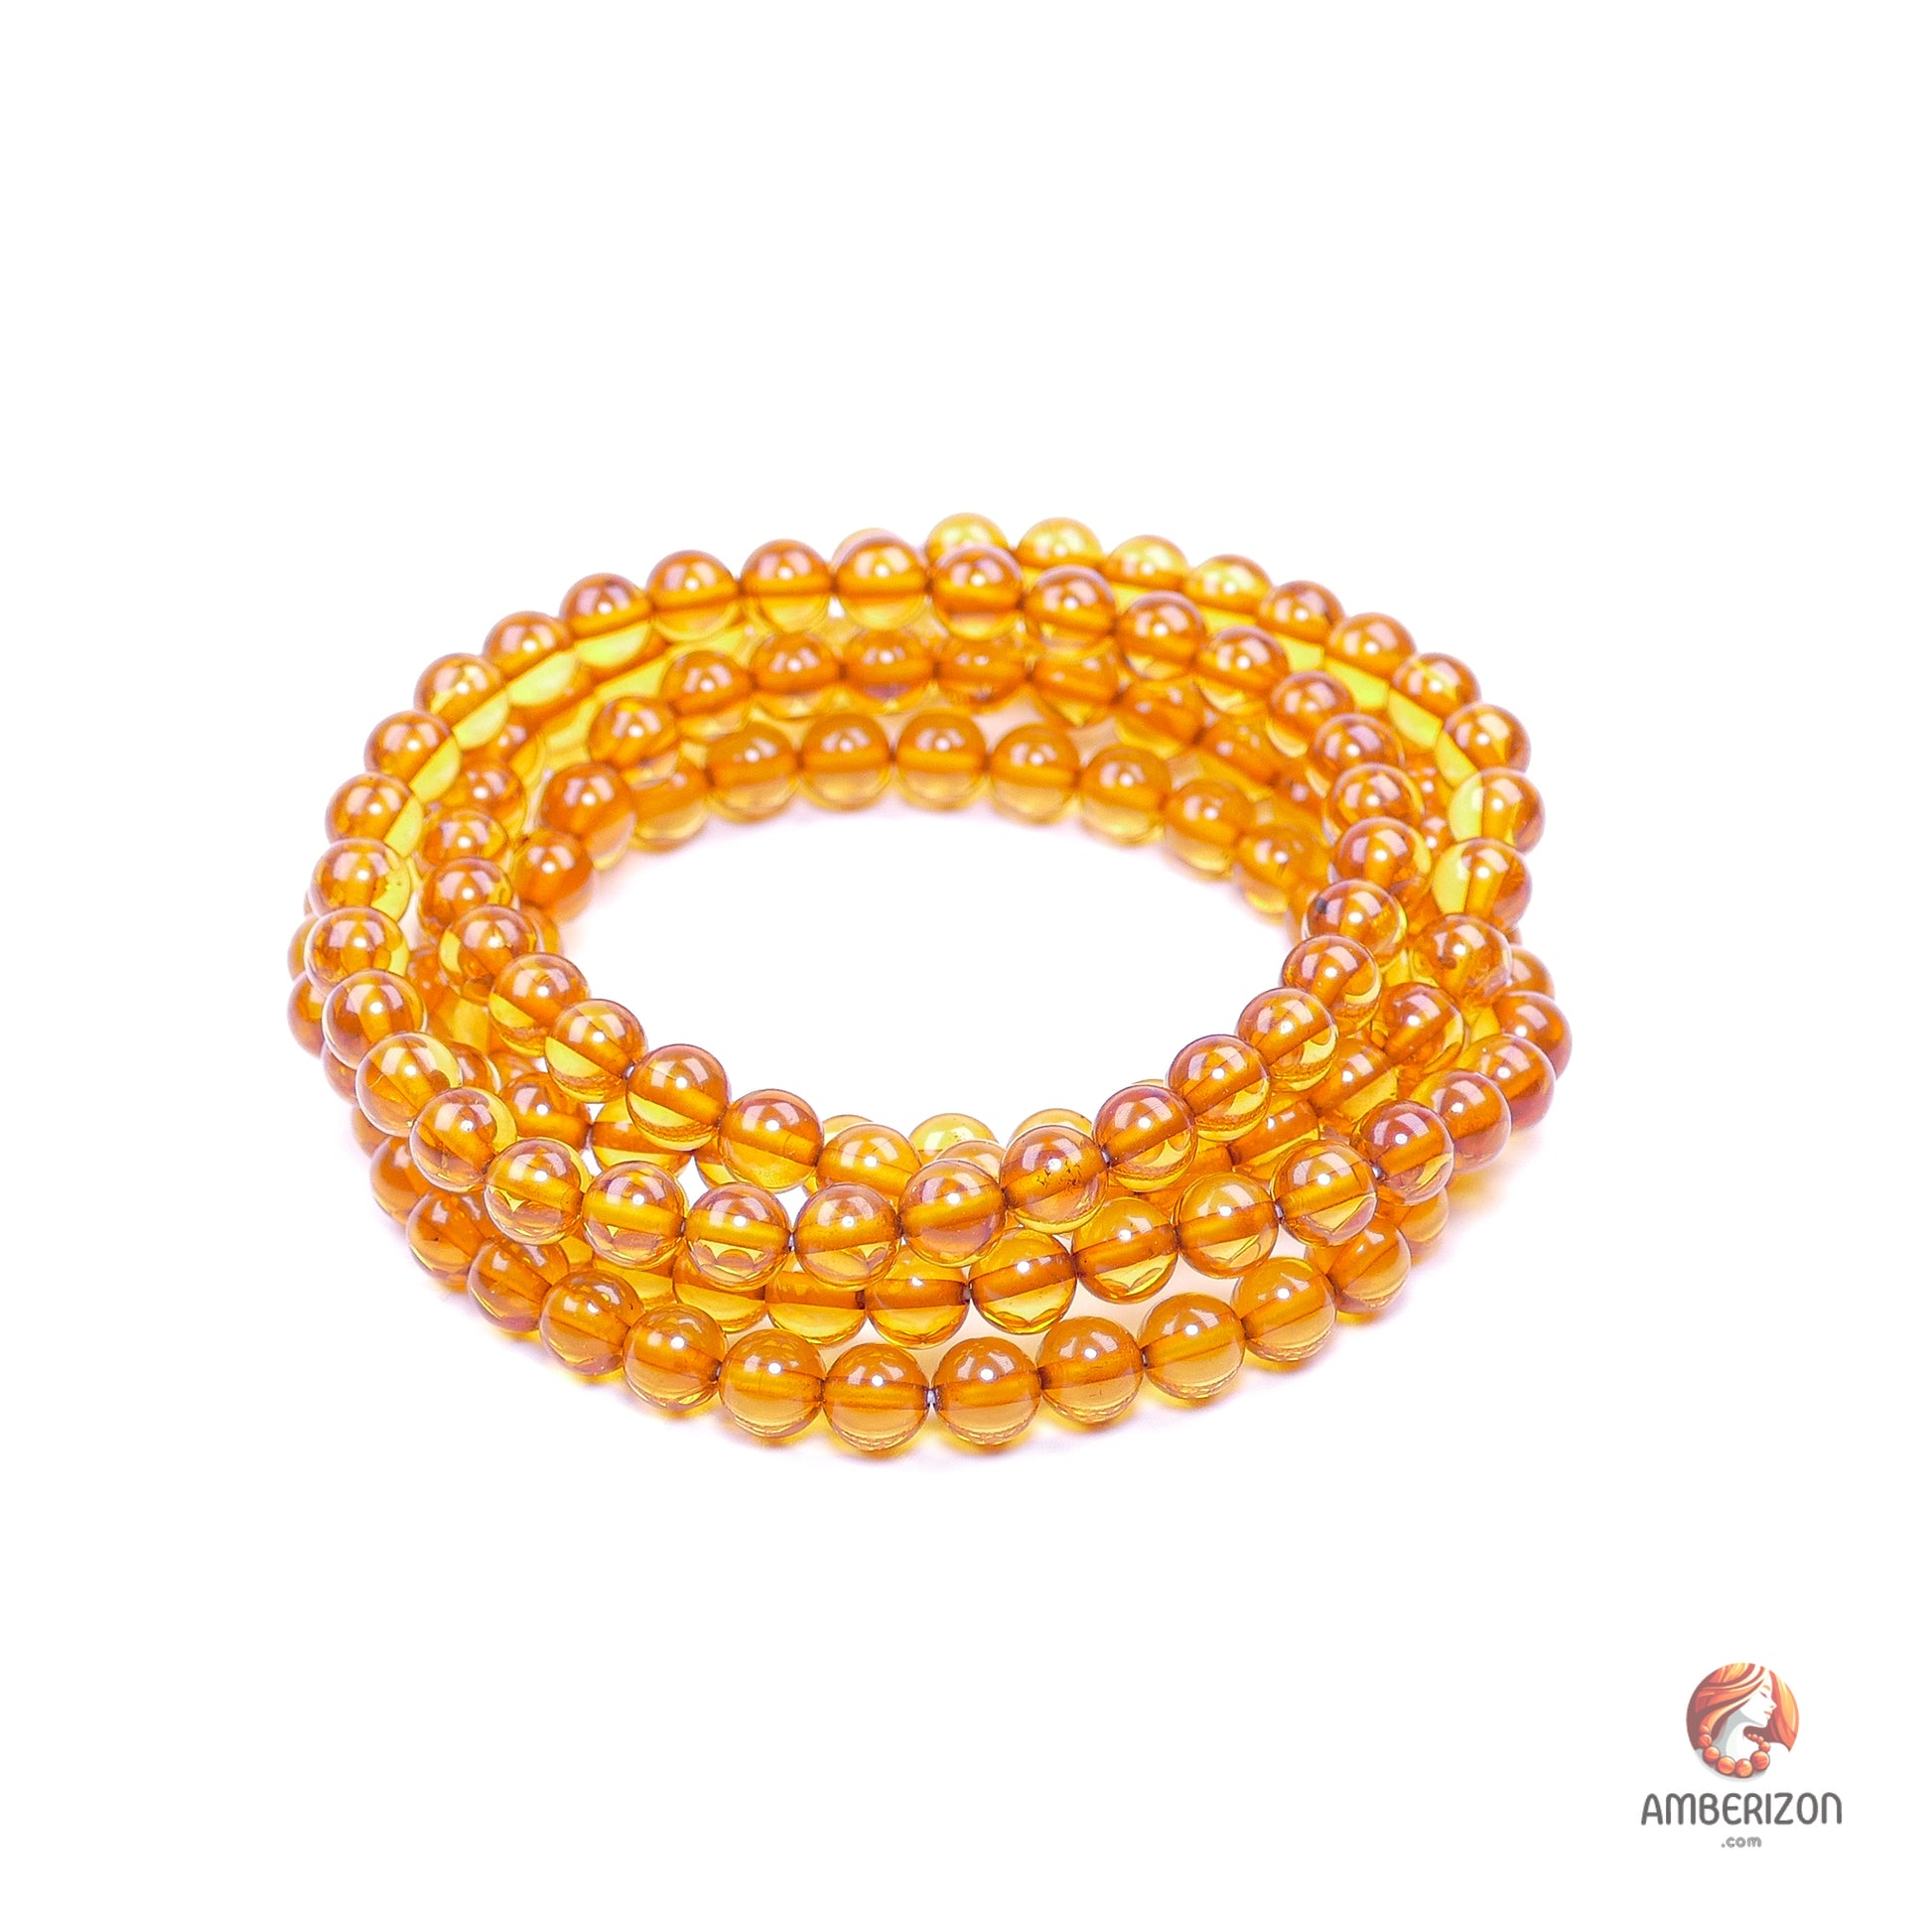 Polished honey amber ball bracelet - Premium AAA quality round beads - Stretchy